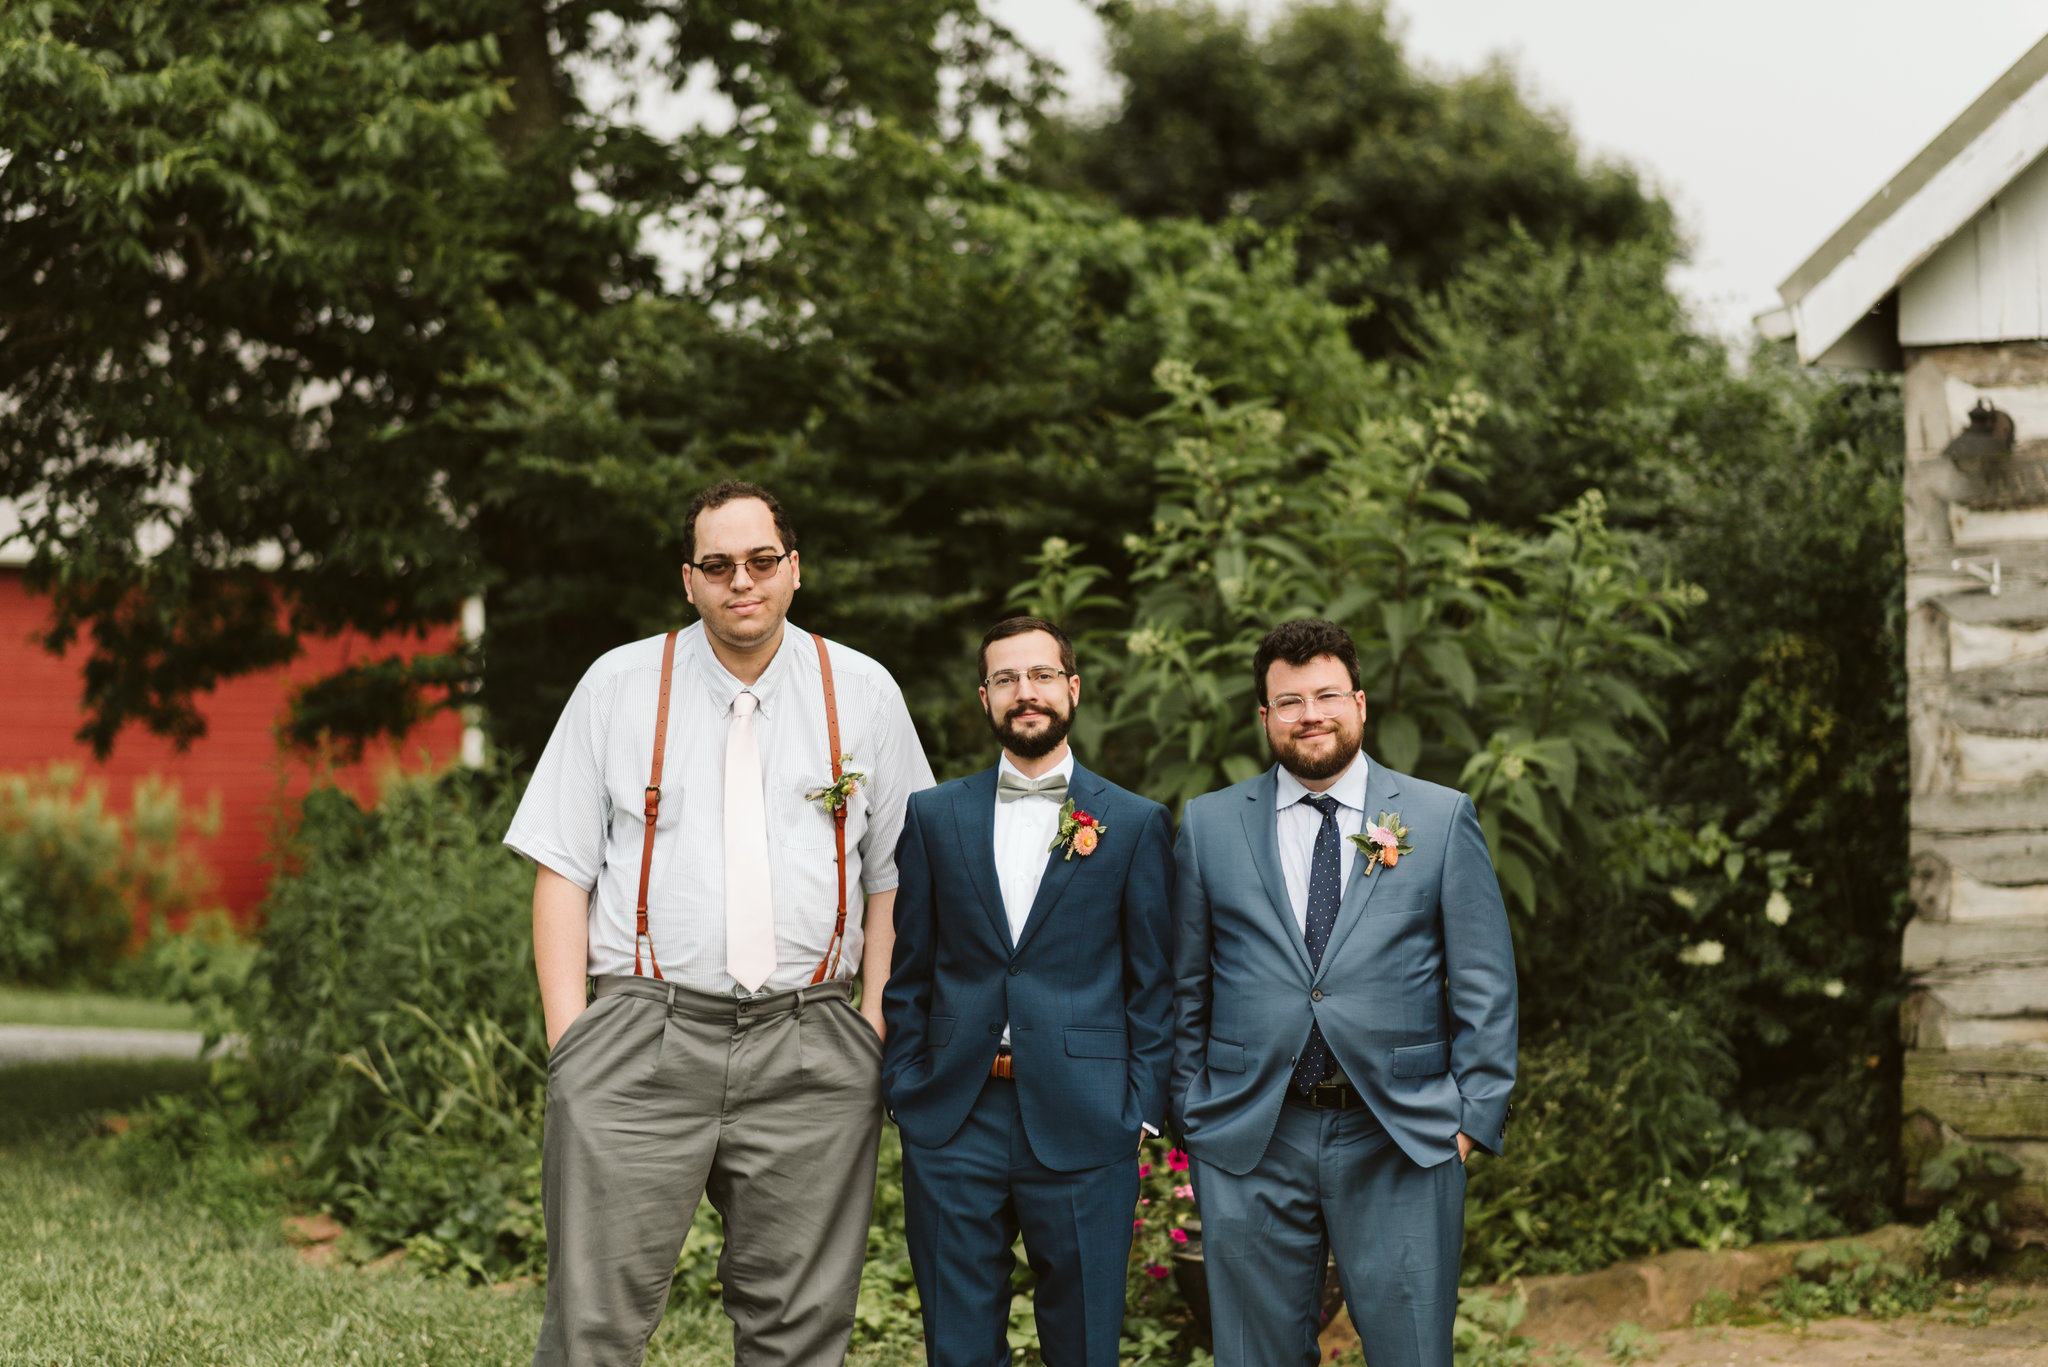 Rocklands Farm, Maryland, Intimate Wedding, Baltimore Wedding Photographer, Sungold Flower Co, Rustic, Romantic, Barn Wedding, Groom with Groomsmen Before Ceremony